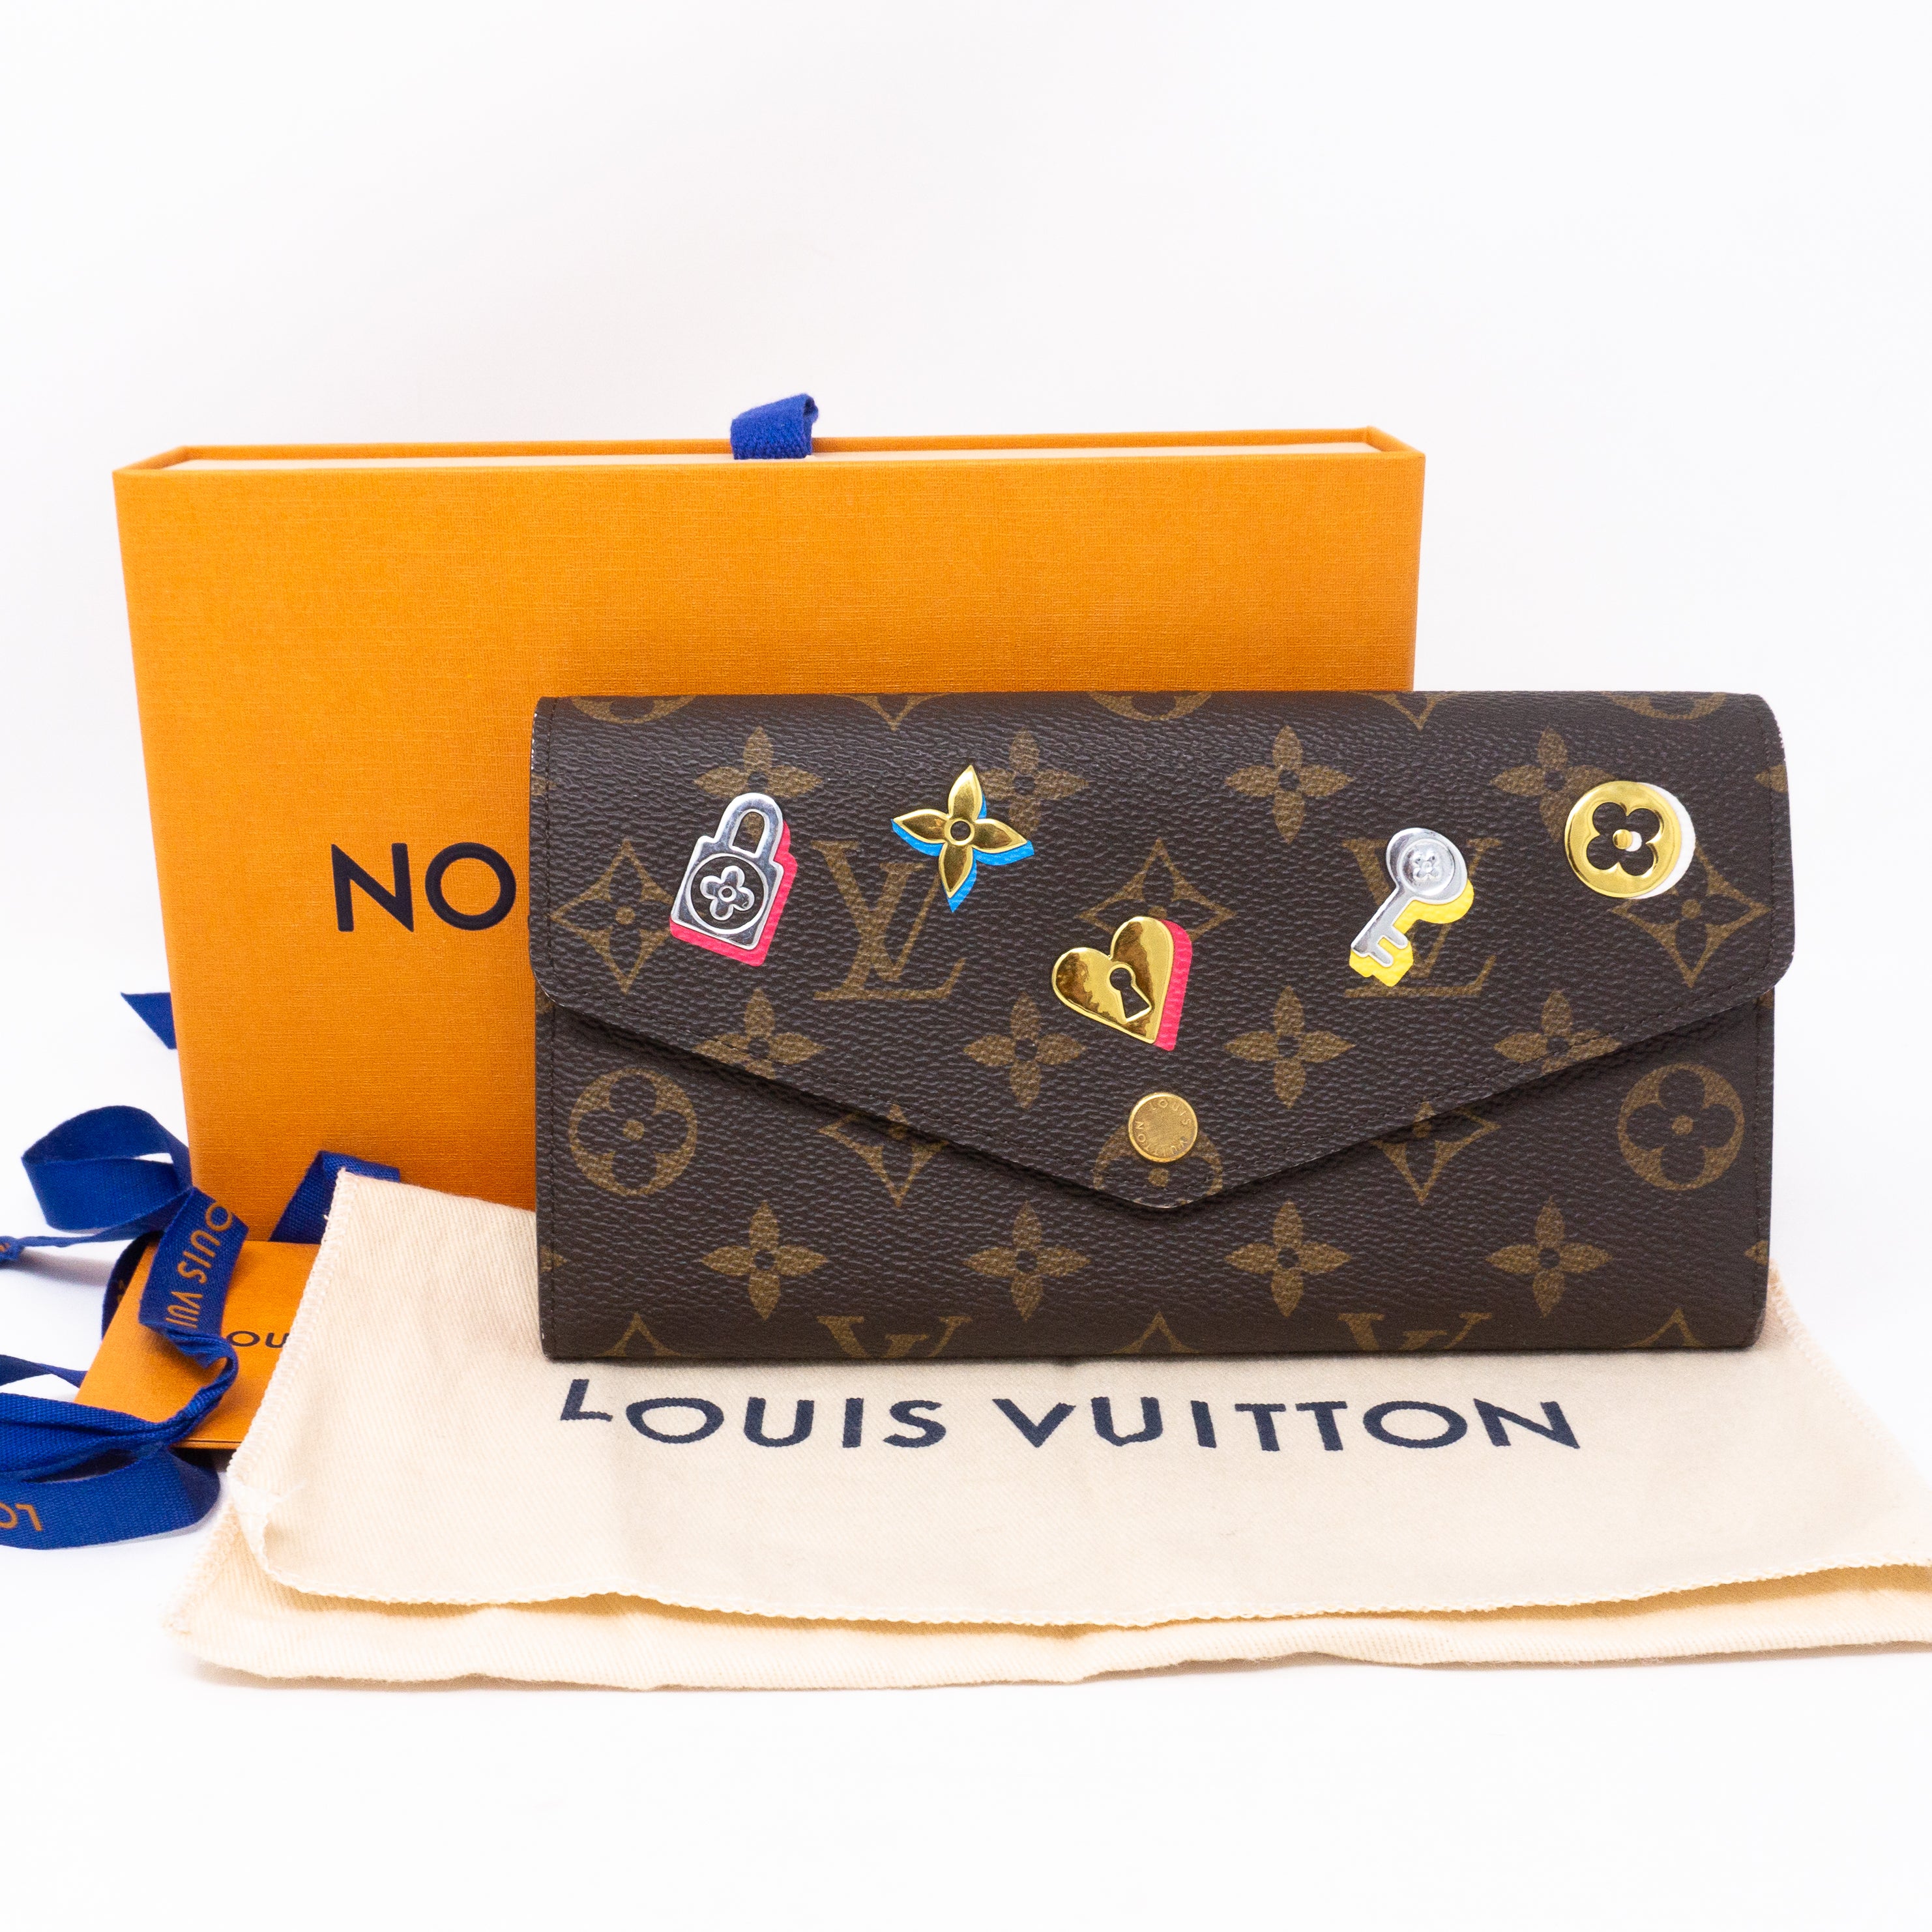 Authentic Louis Vuitton Monogram Sarah Wallet With Chain #TH0967